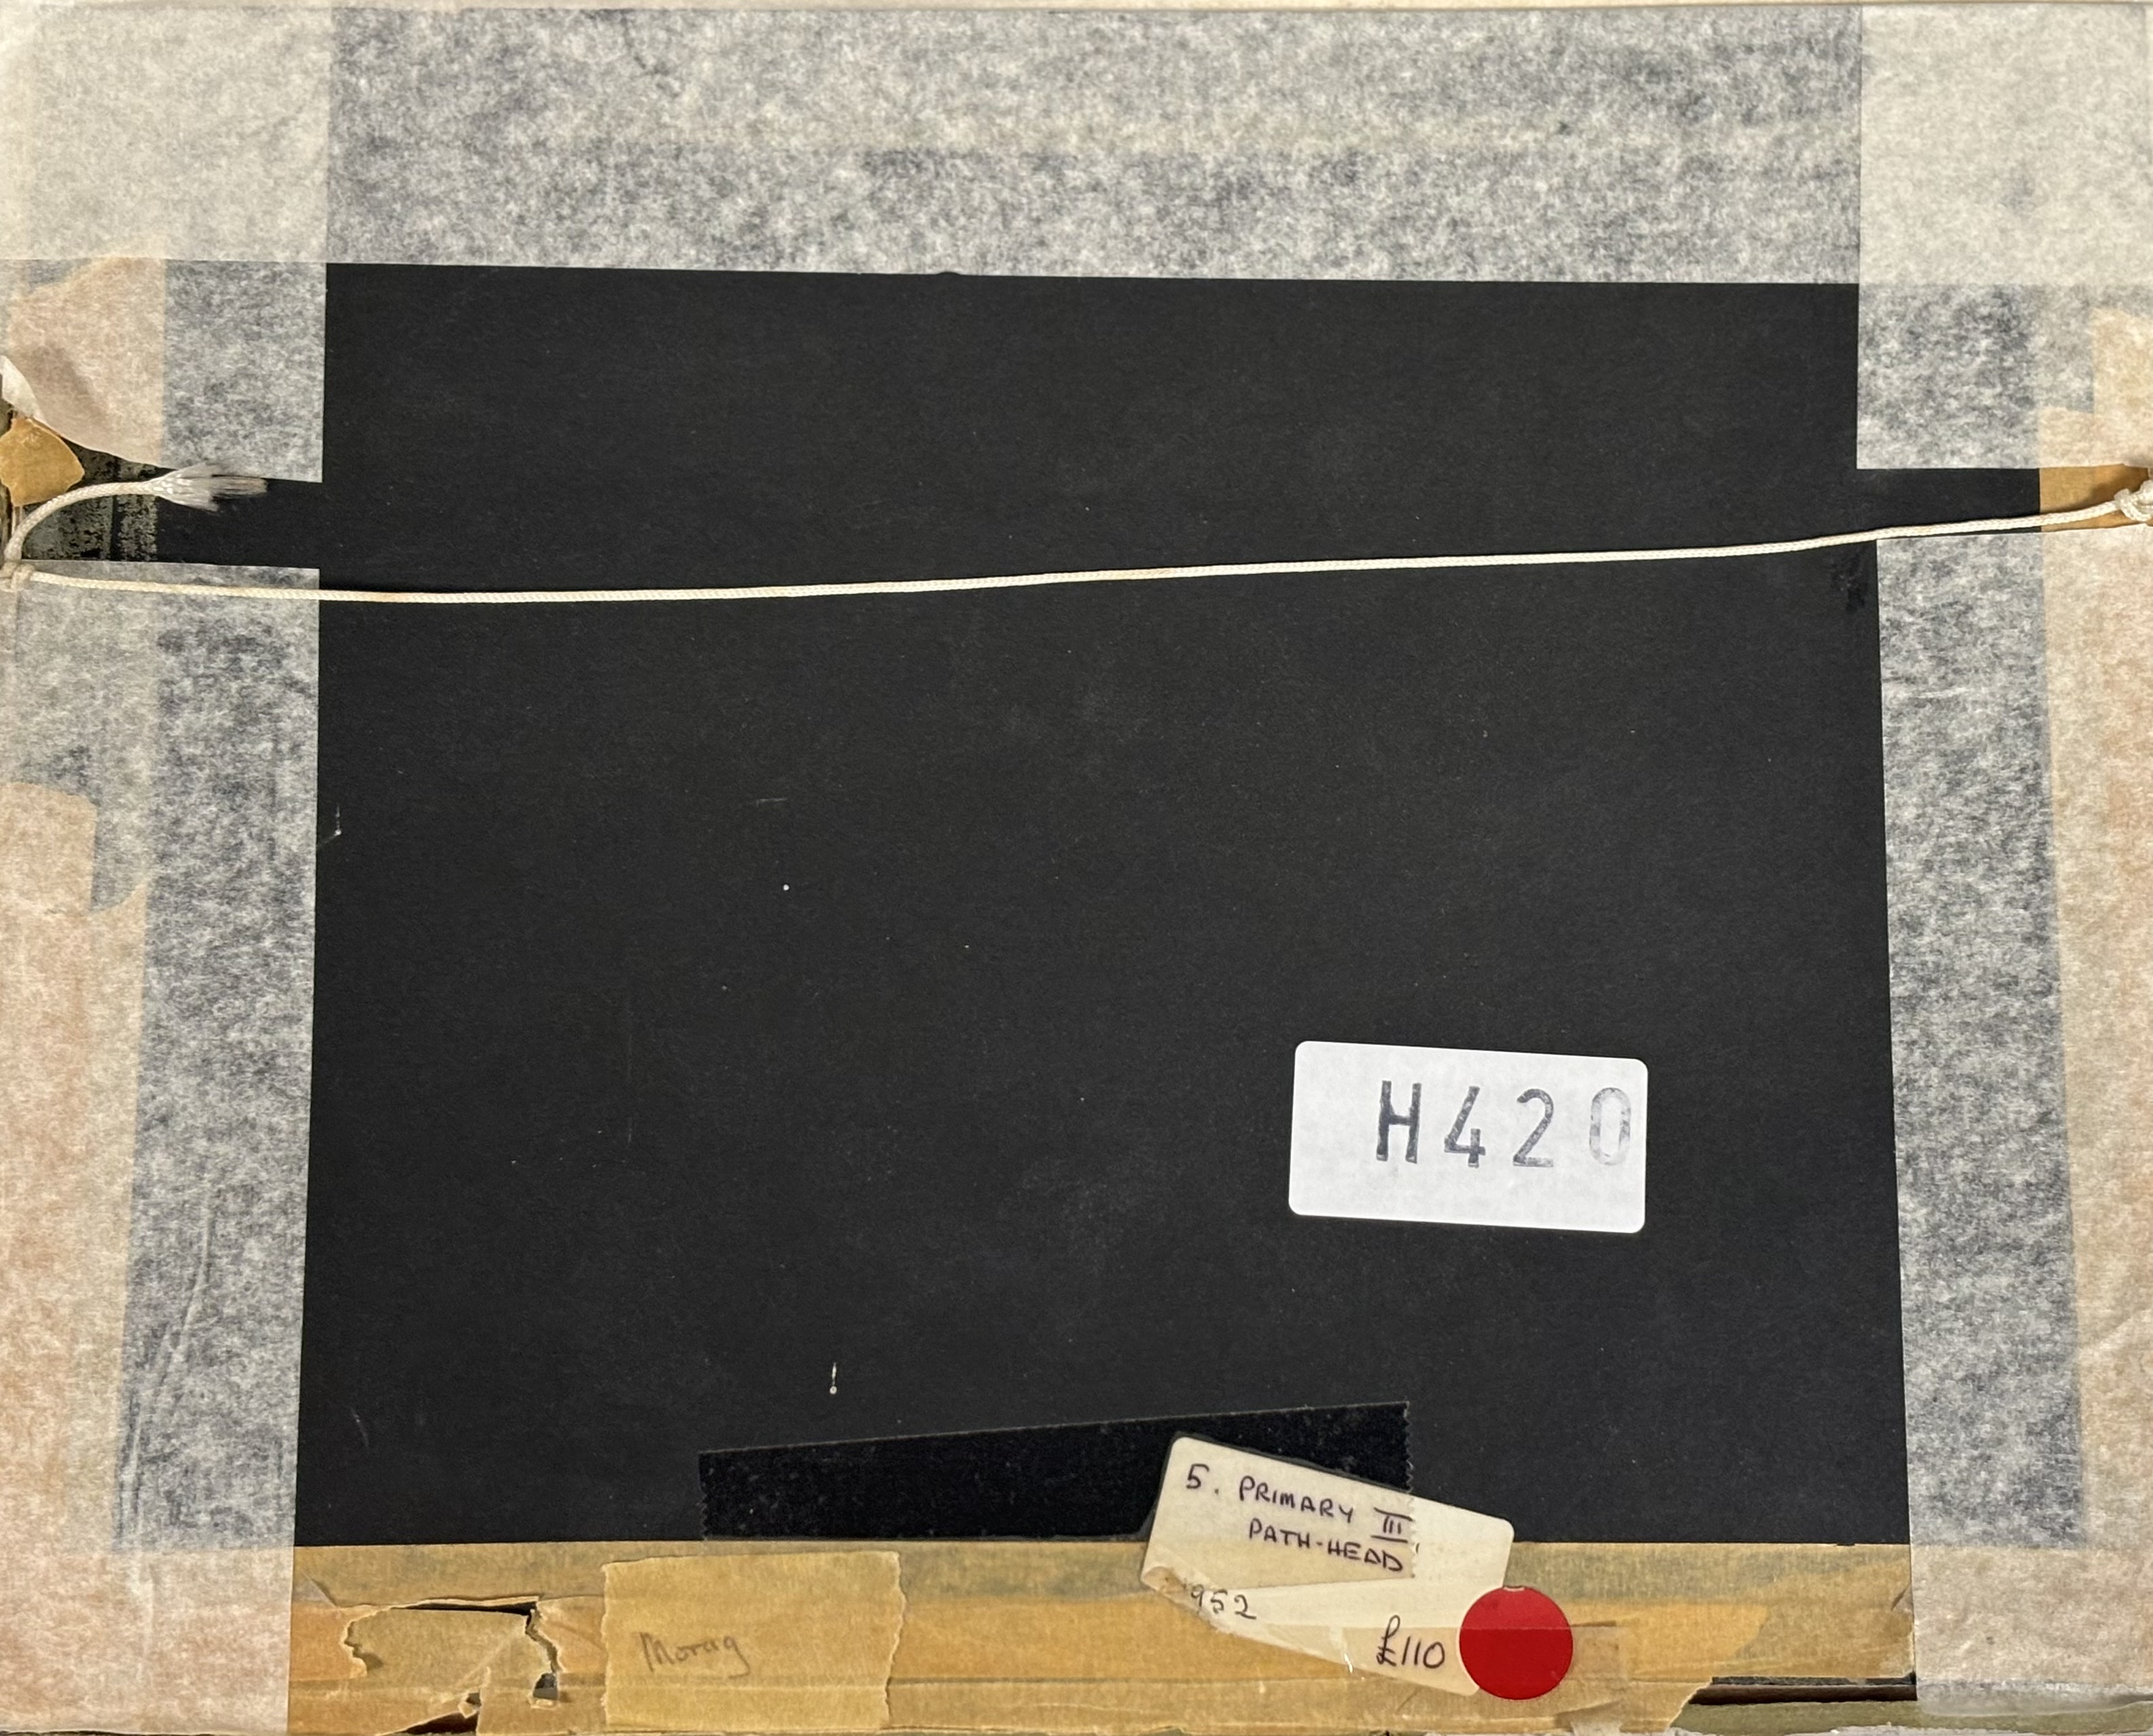 Hamish Lawrie (Scottish, 1919-1987), "Primary III, Path-Head", signed lower left, pastel, label - Image 3 of 3